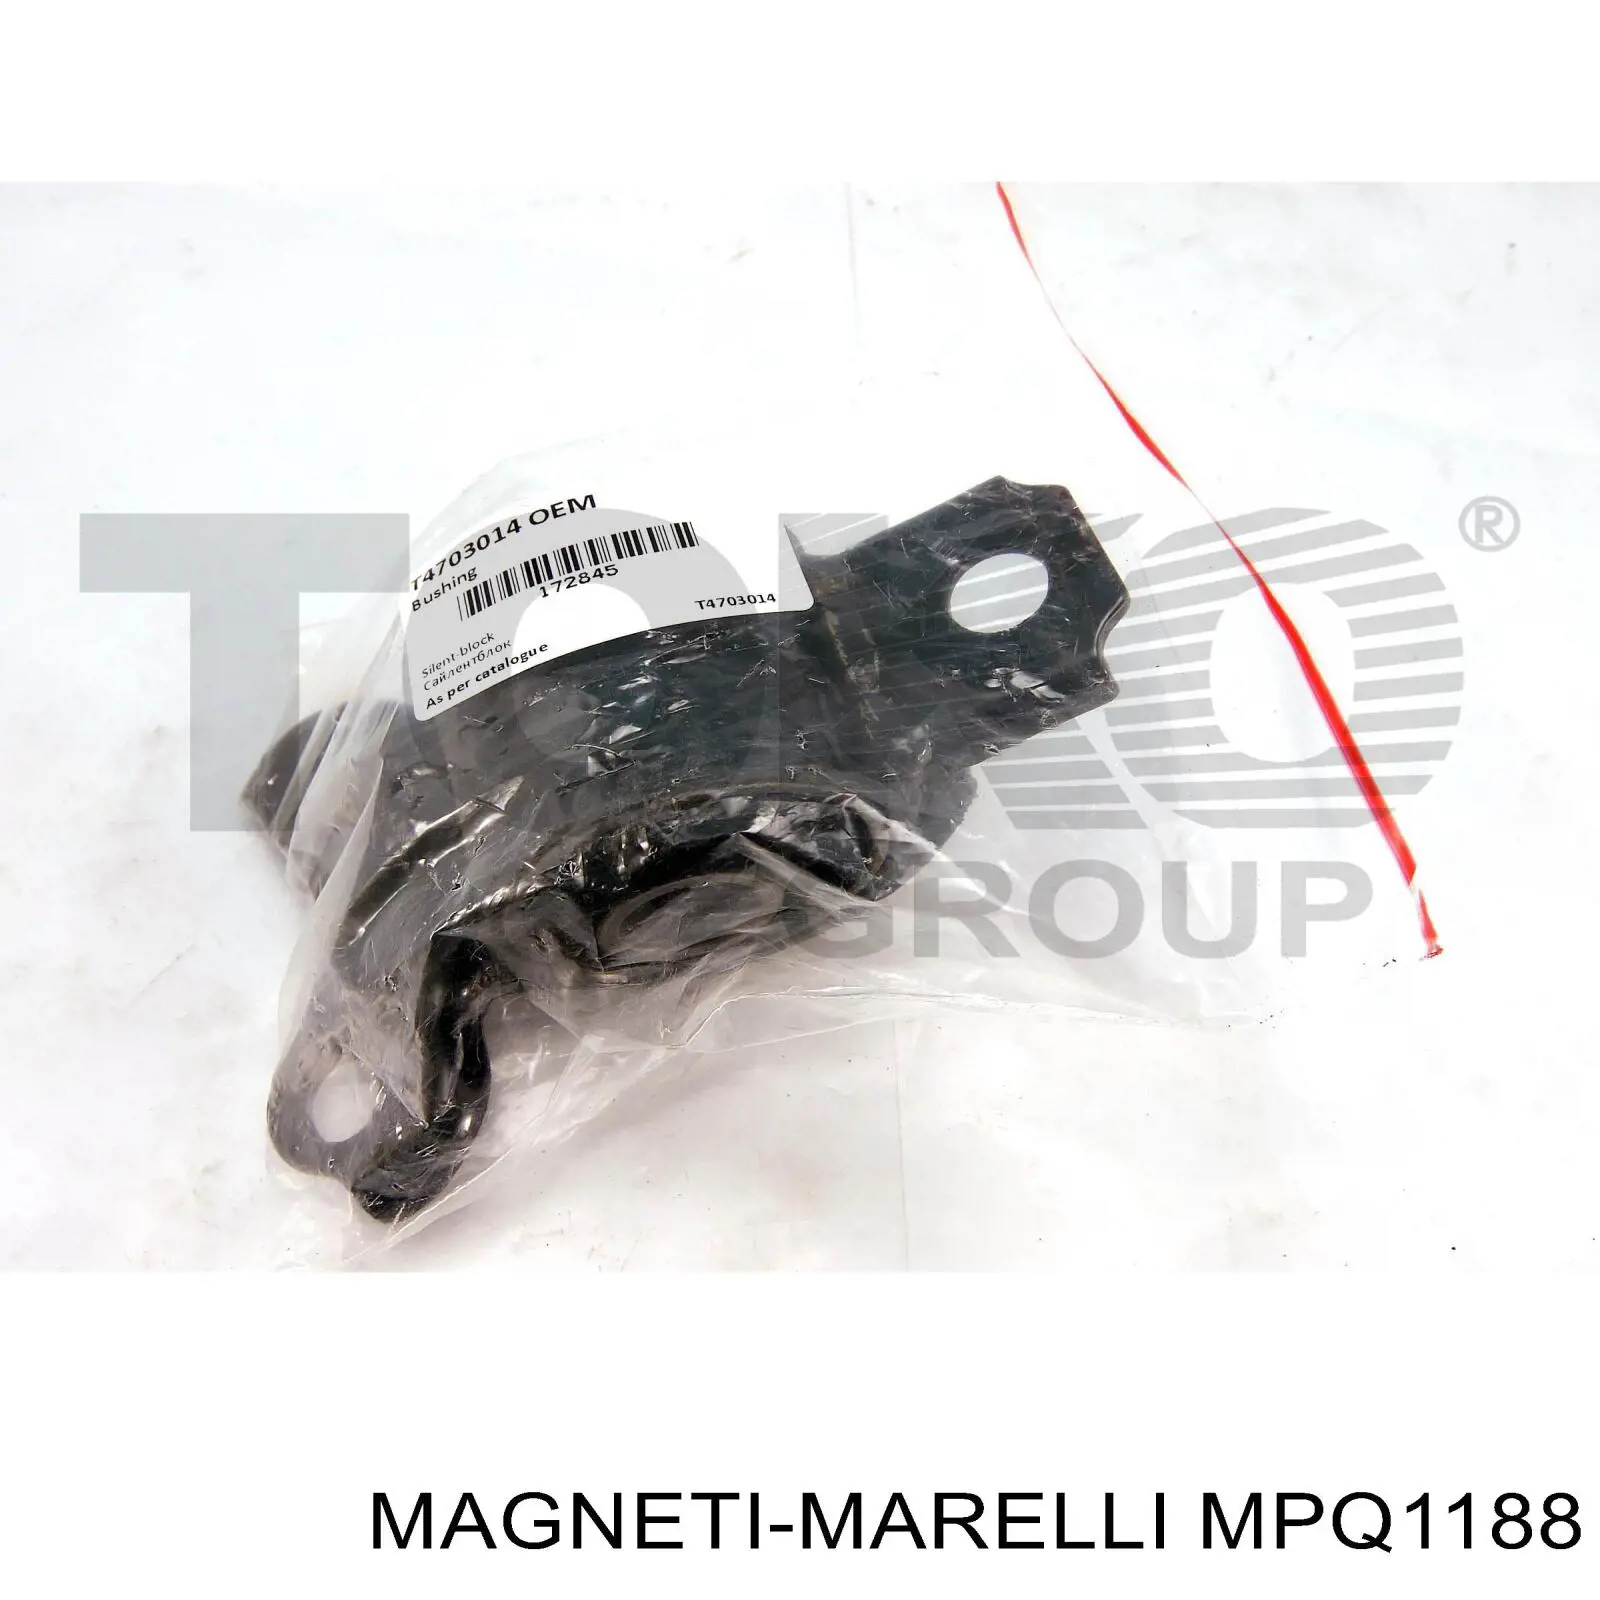 MPQ1188 Magneti Marelli натяжной ролик